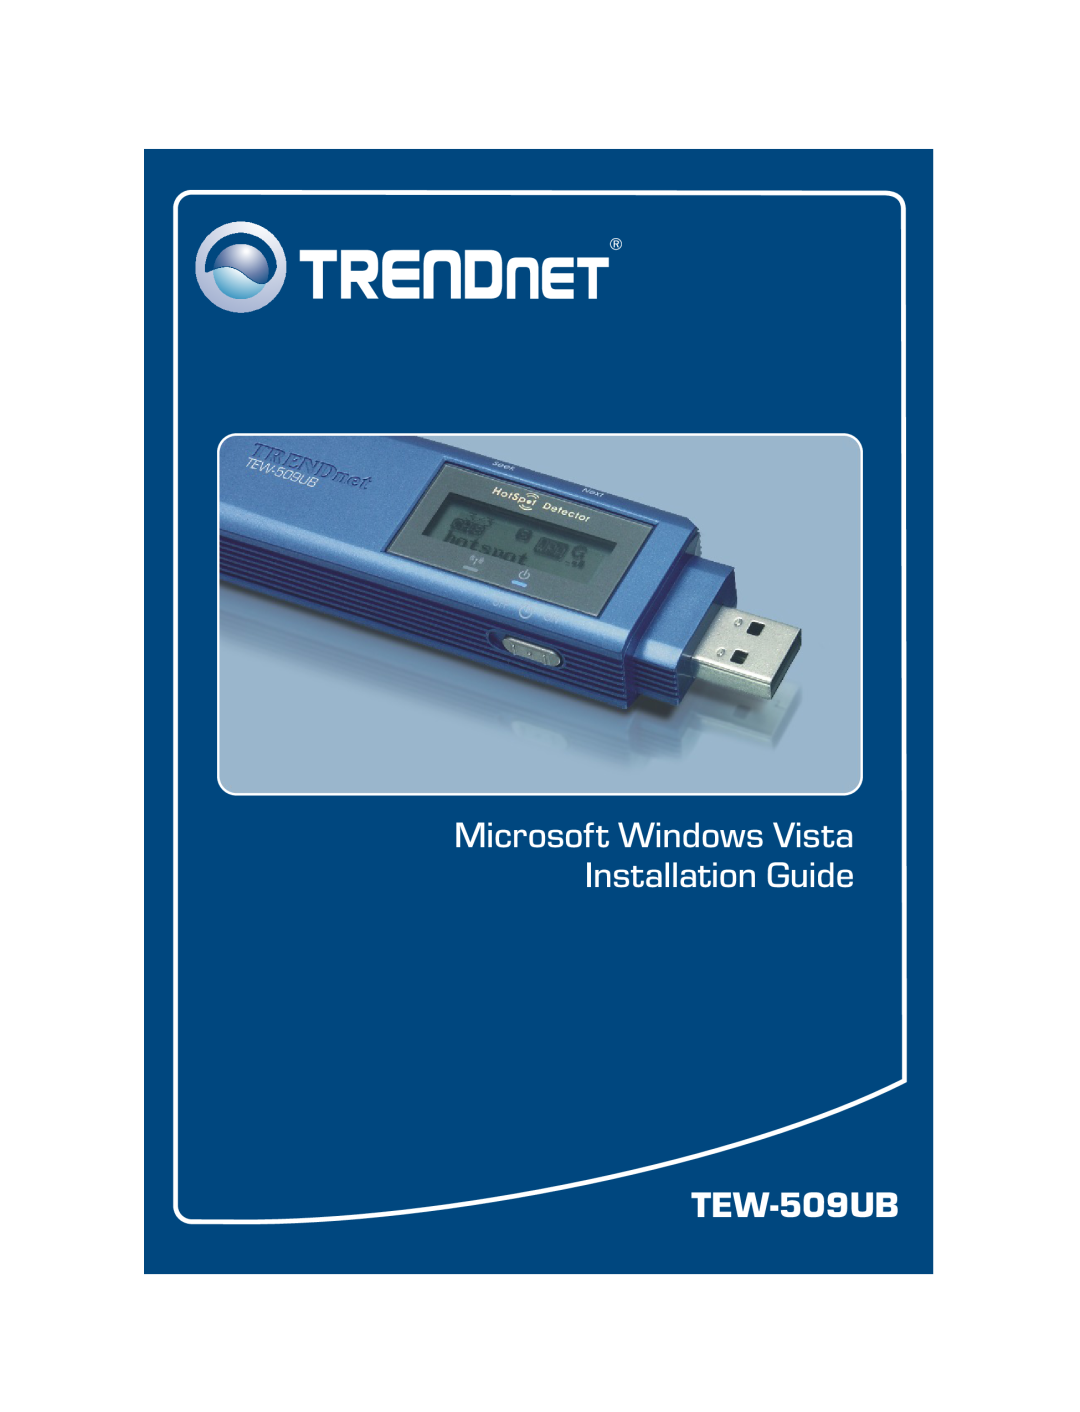 TRENDnet TEW-509UB manual Microsoft Windows Vista Installation Guide 